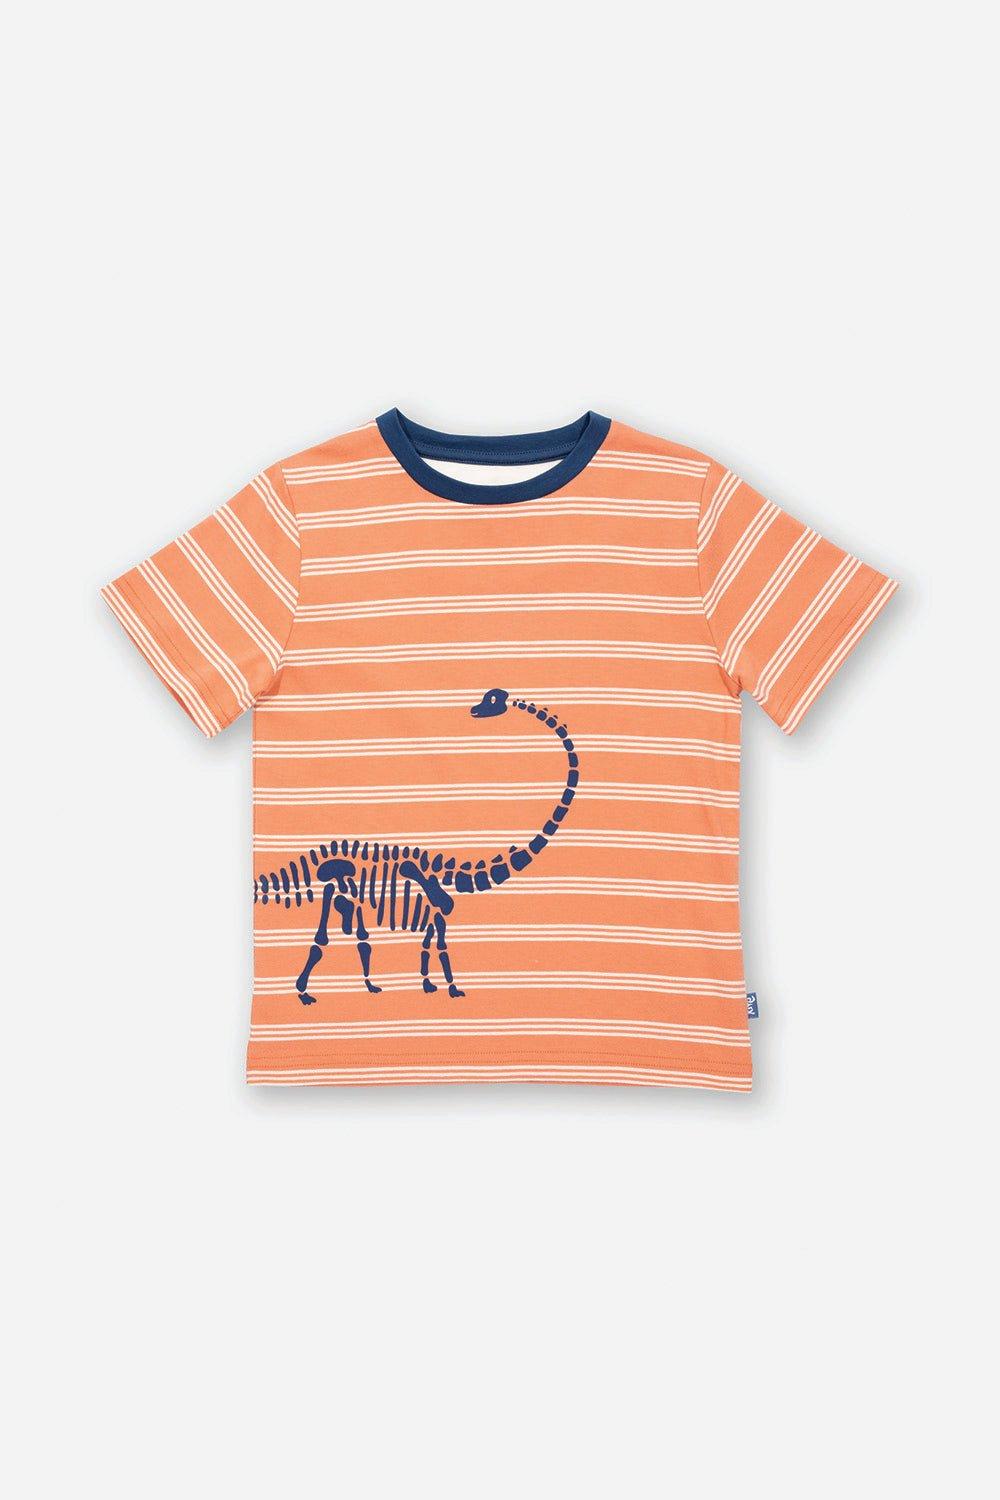 Dippy The Dino T-Shirt